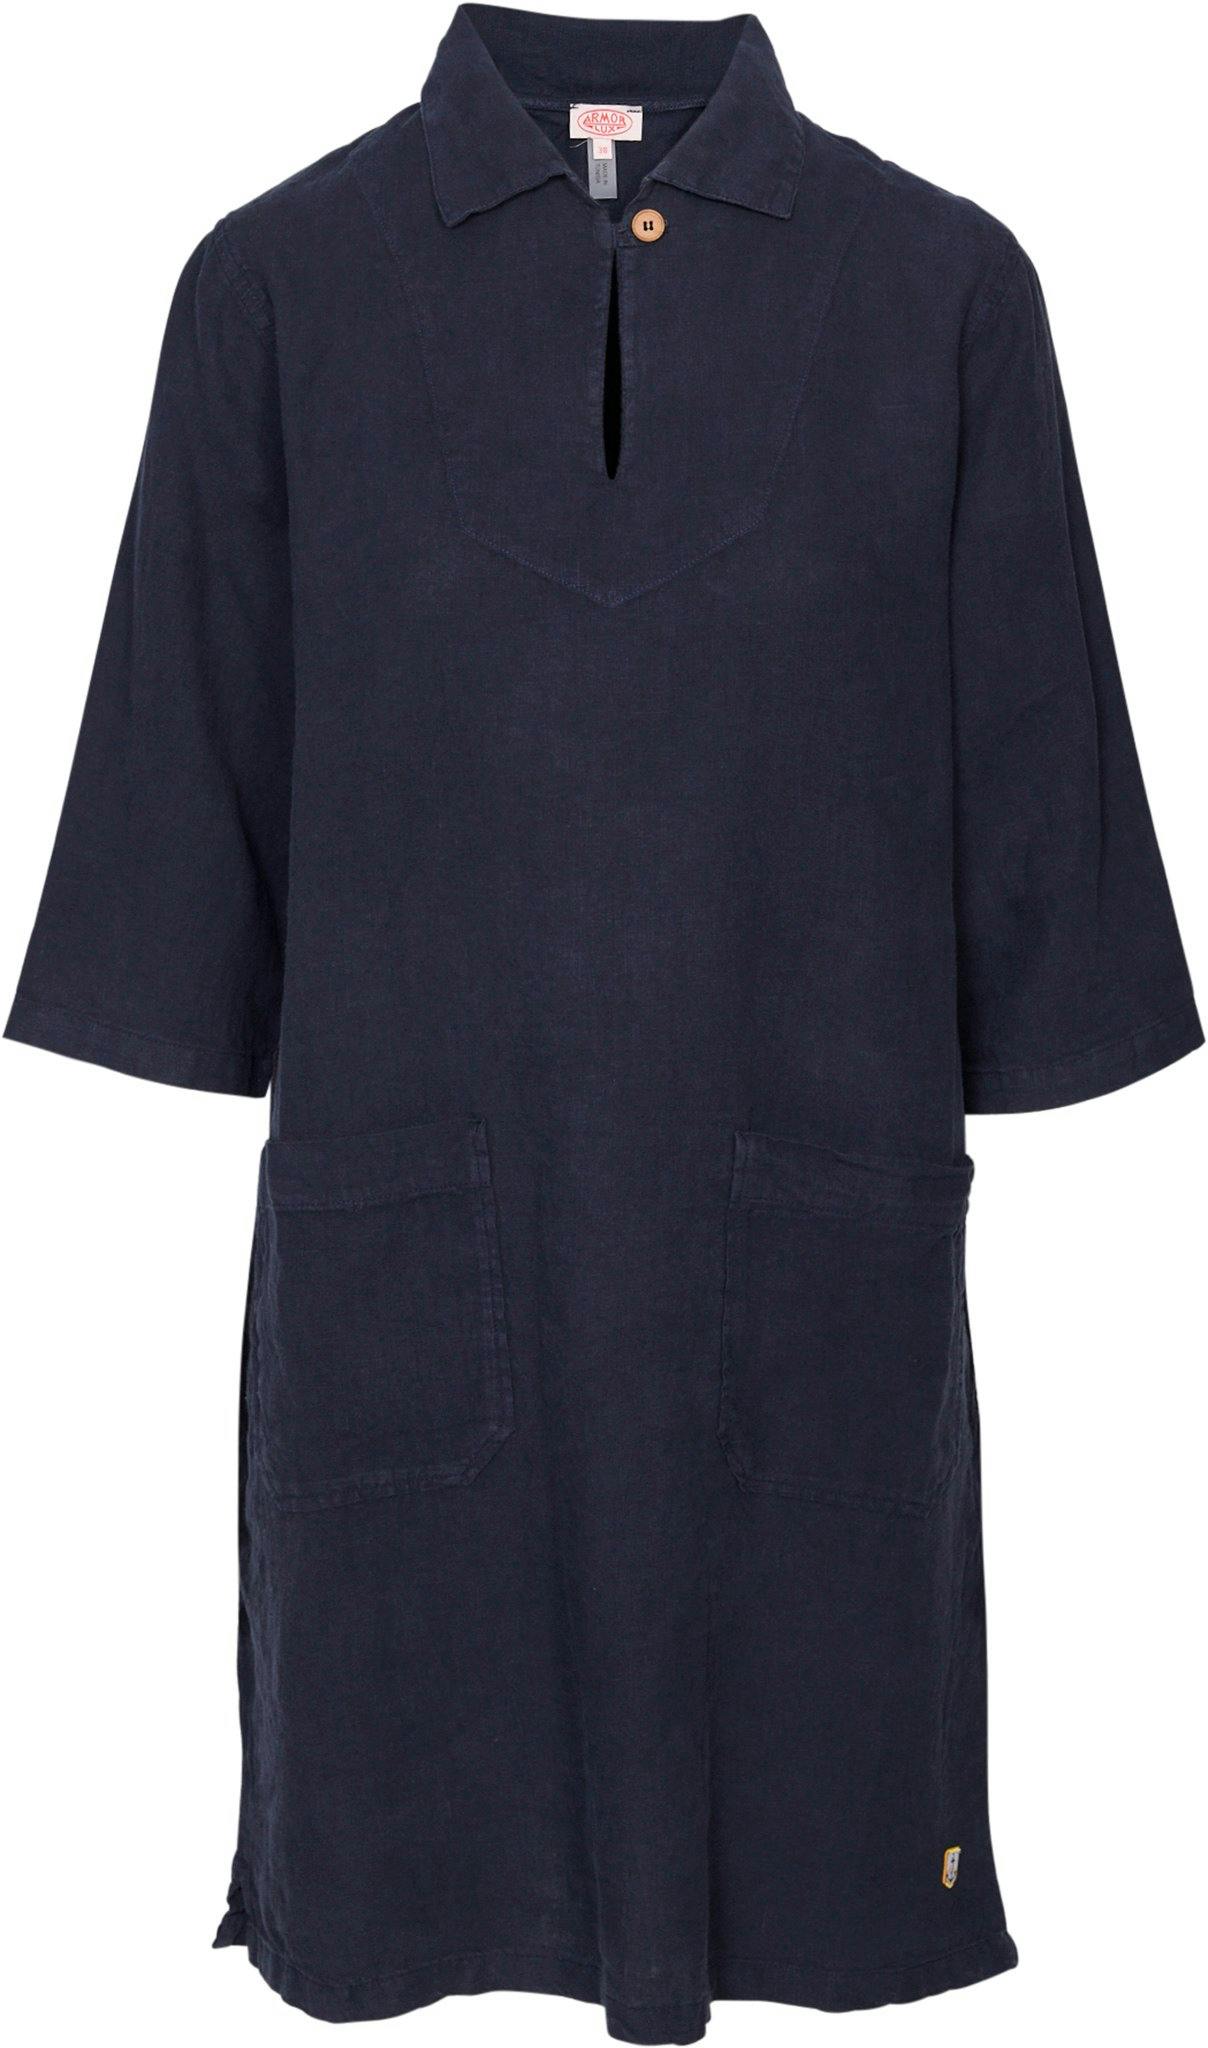 Product image for Vareuse Linen Tunic Dress - Women's